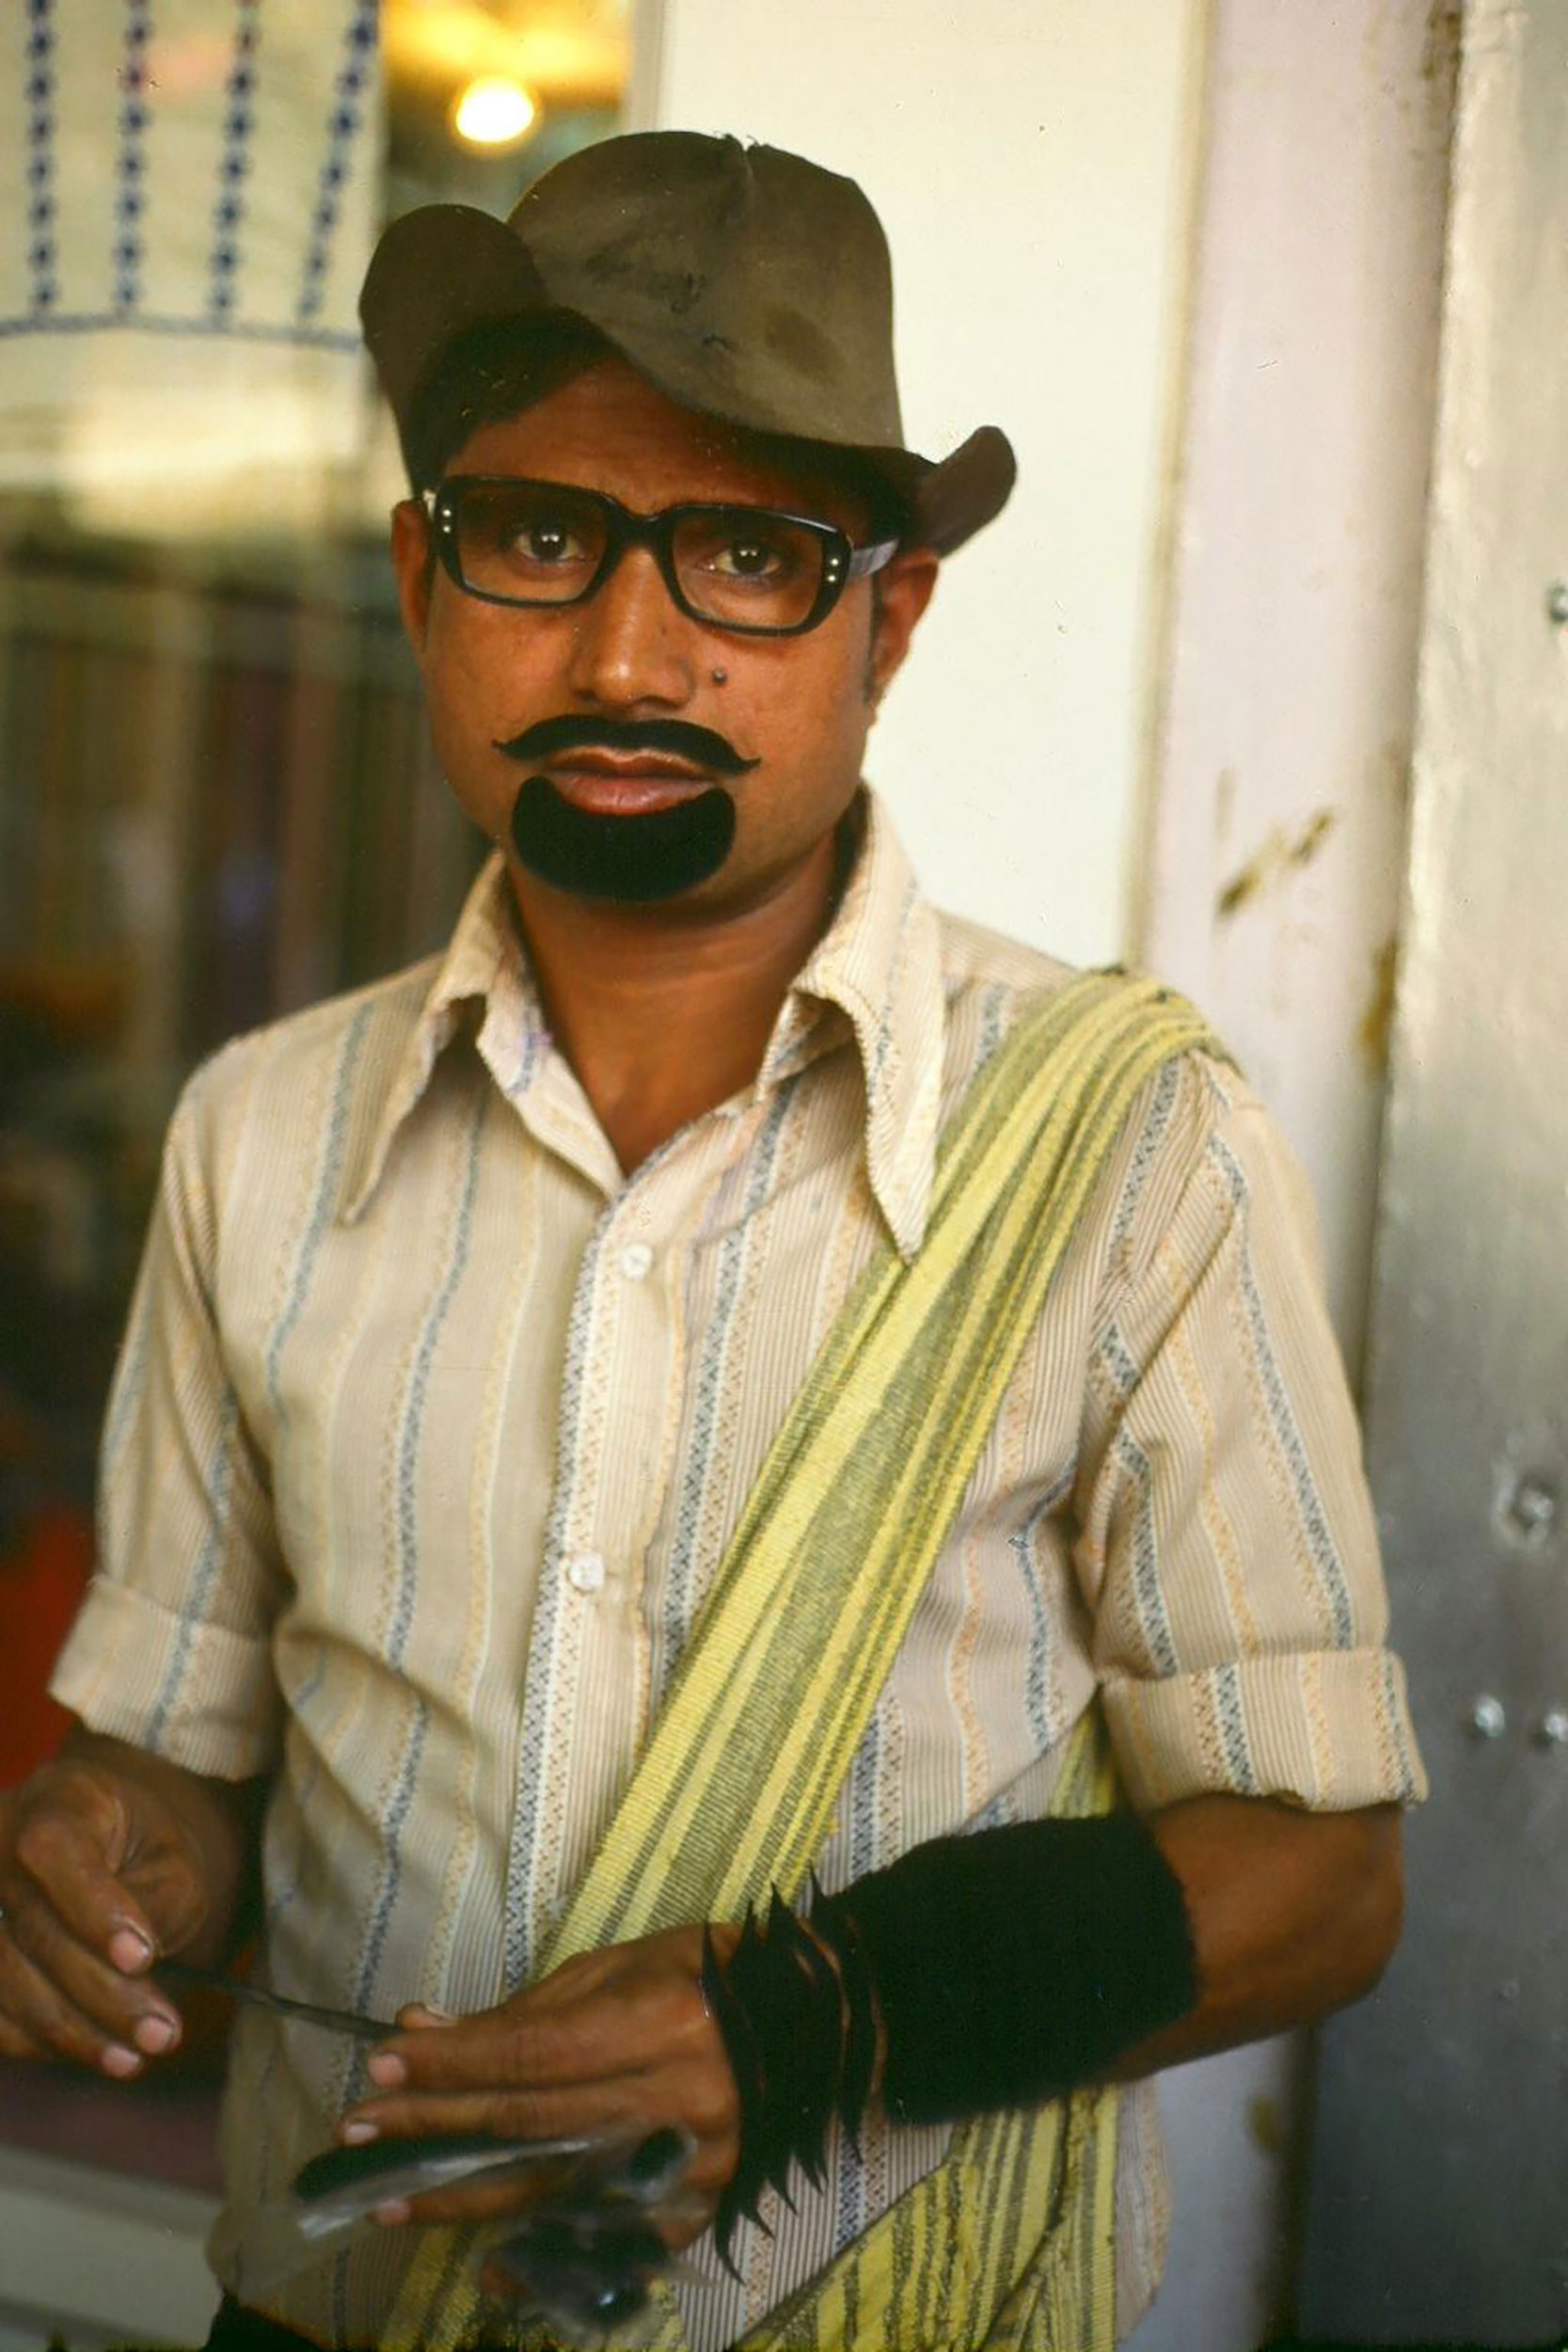 Mustache Salesman/New Delhi India